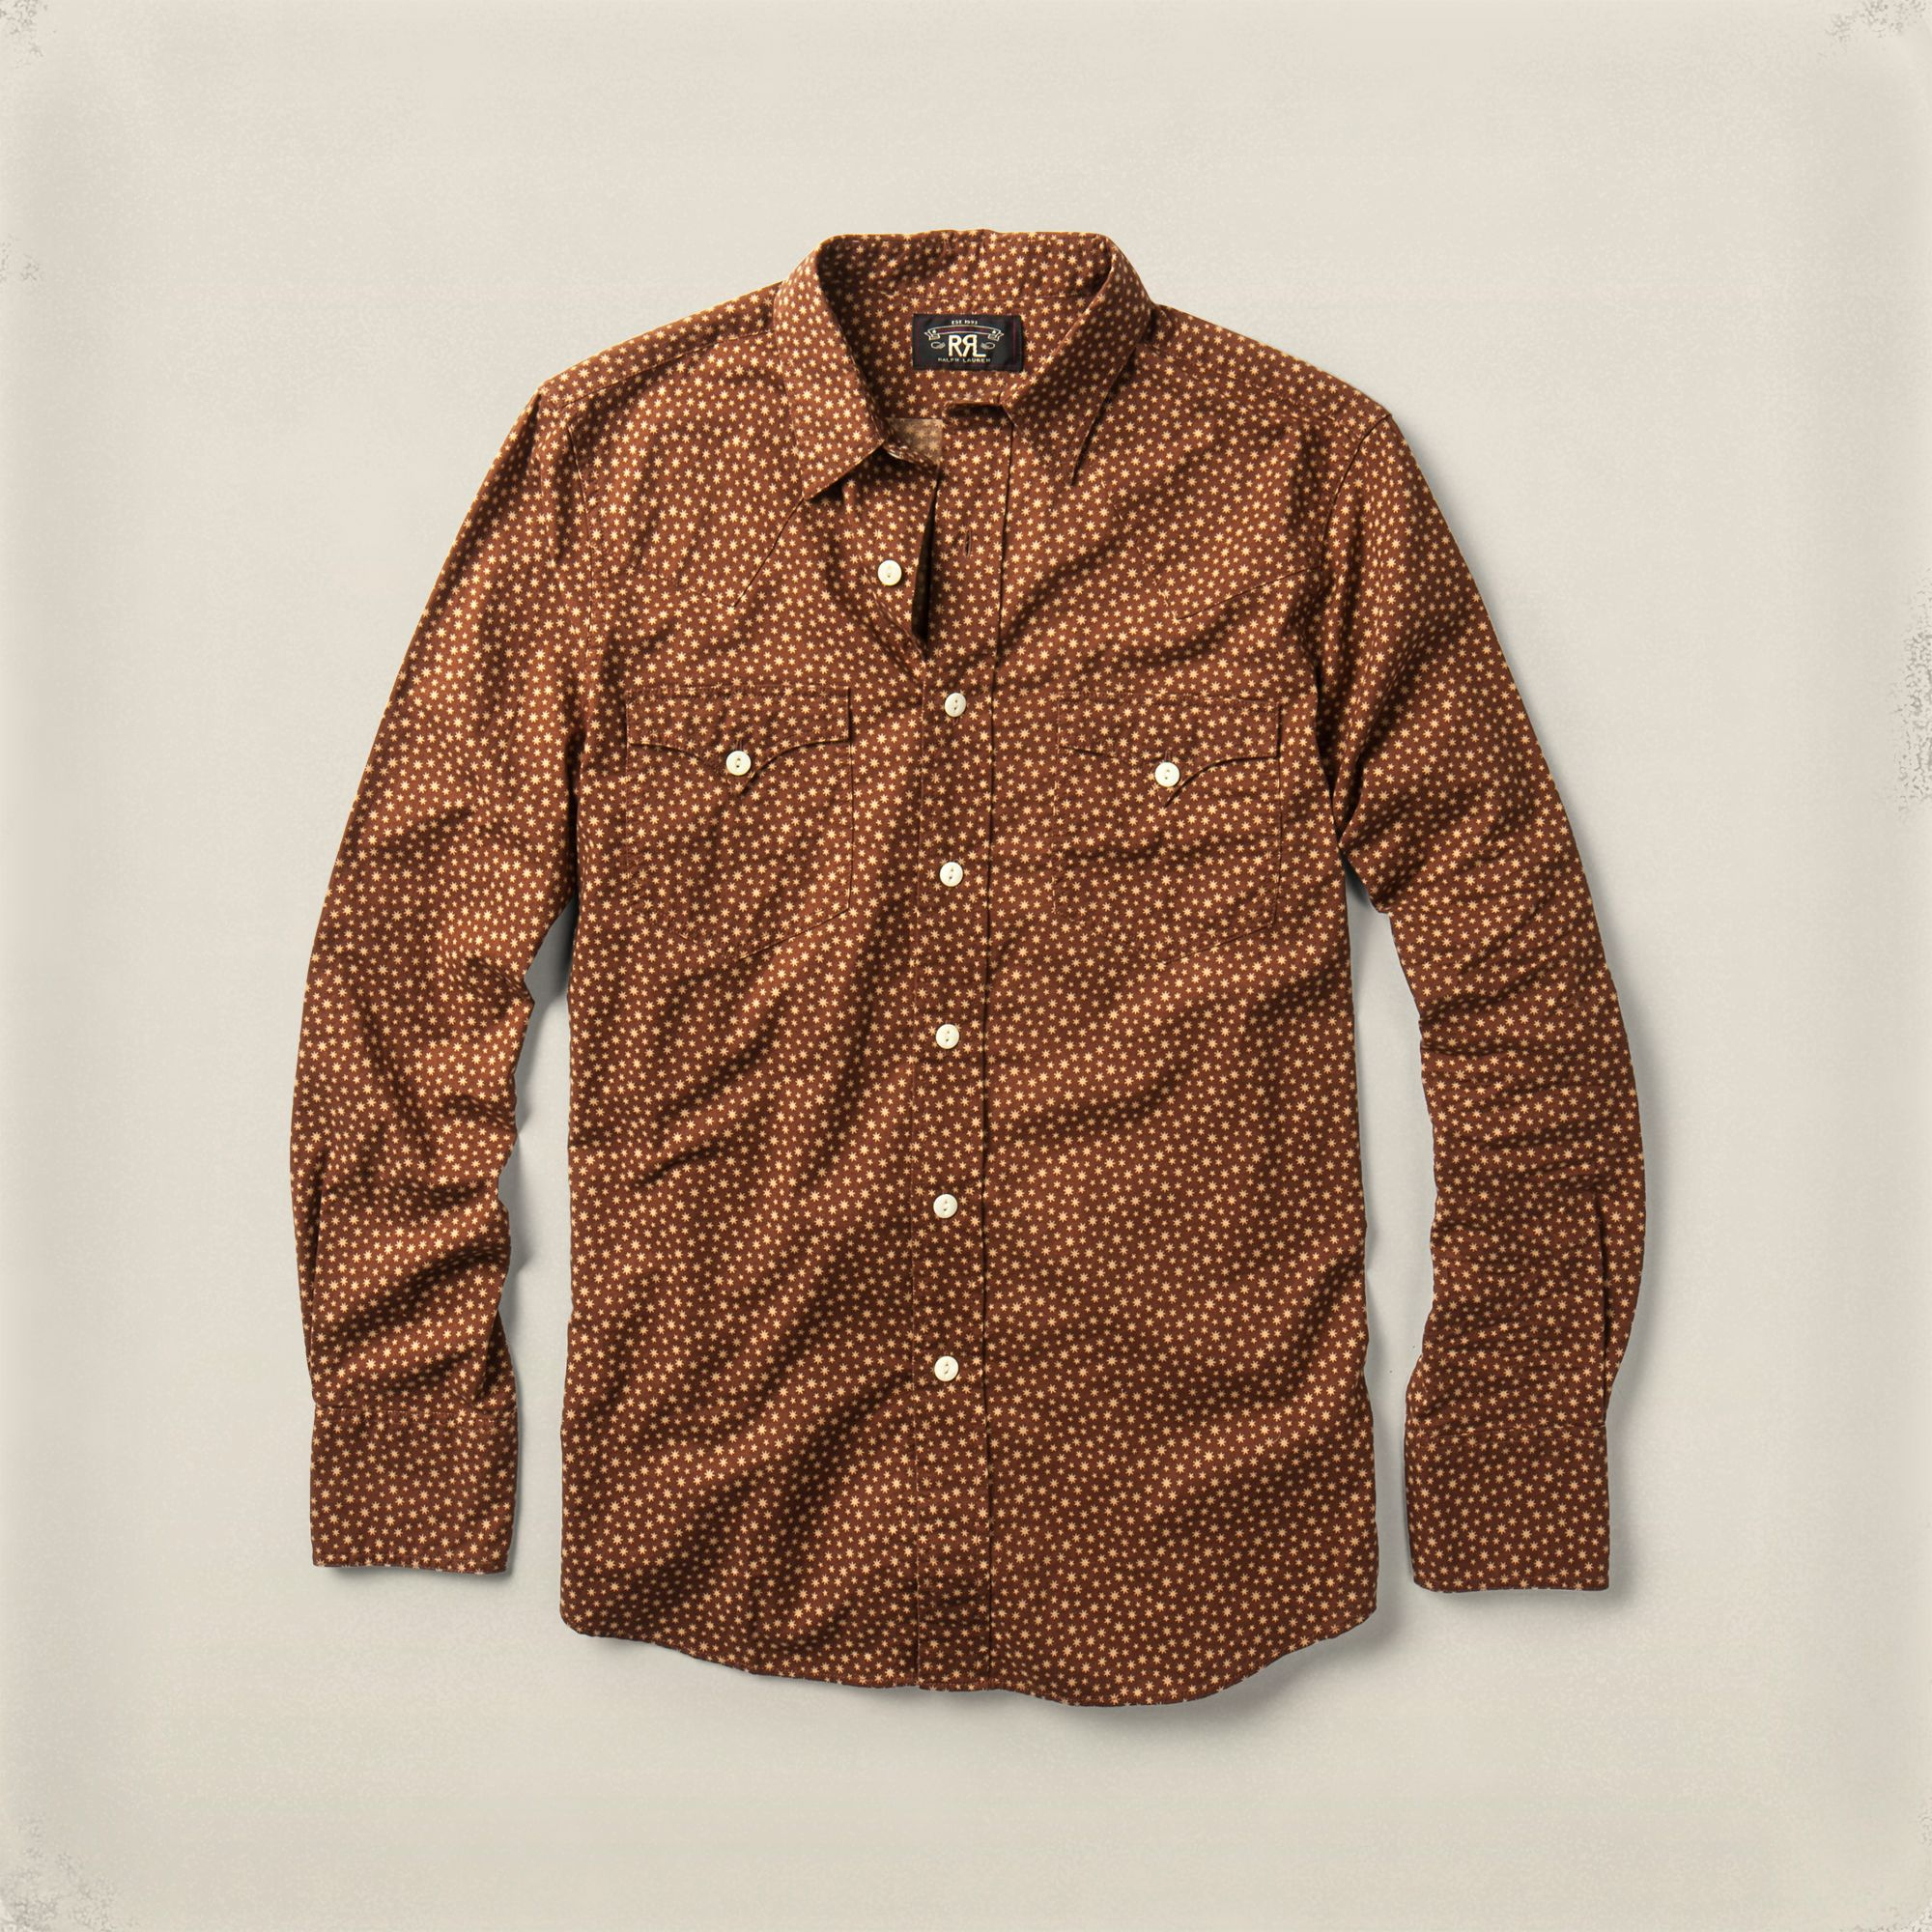 Rrl Slim Kane Western Shirt in Brown for Men (Brown / Cream)